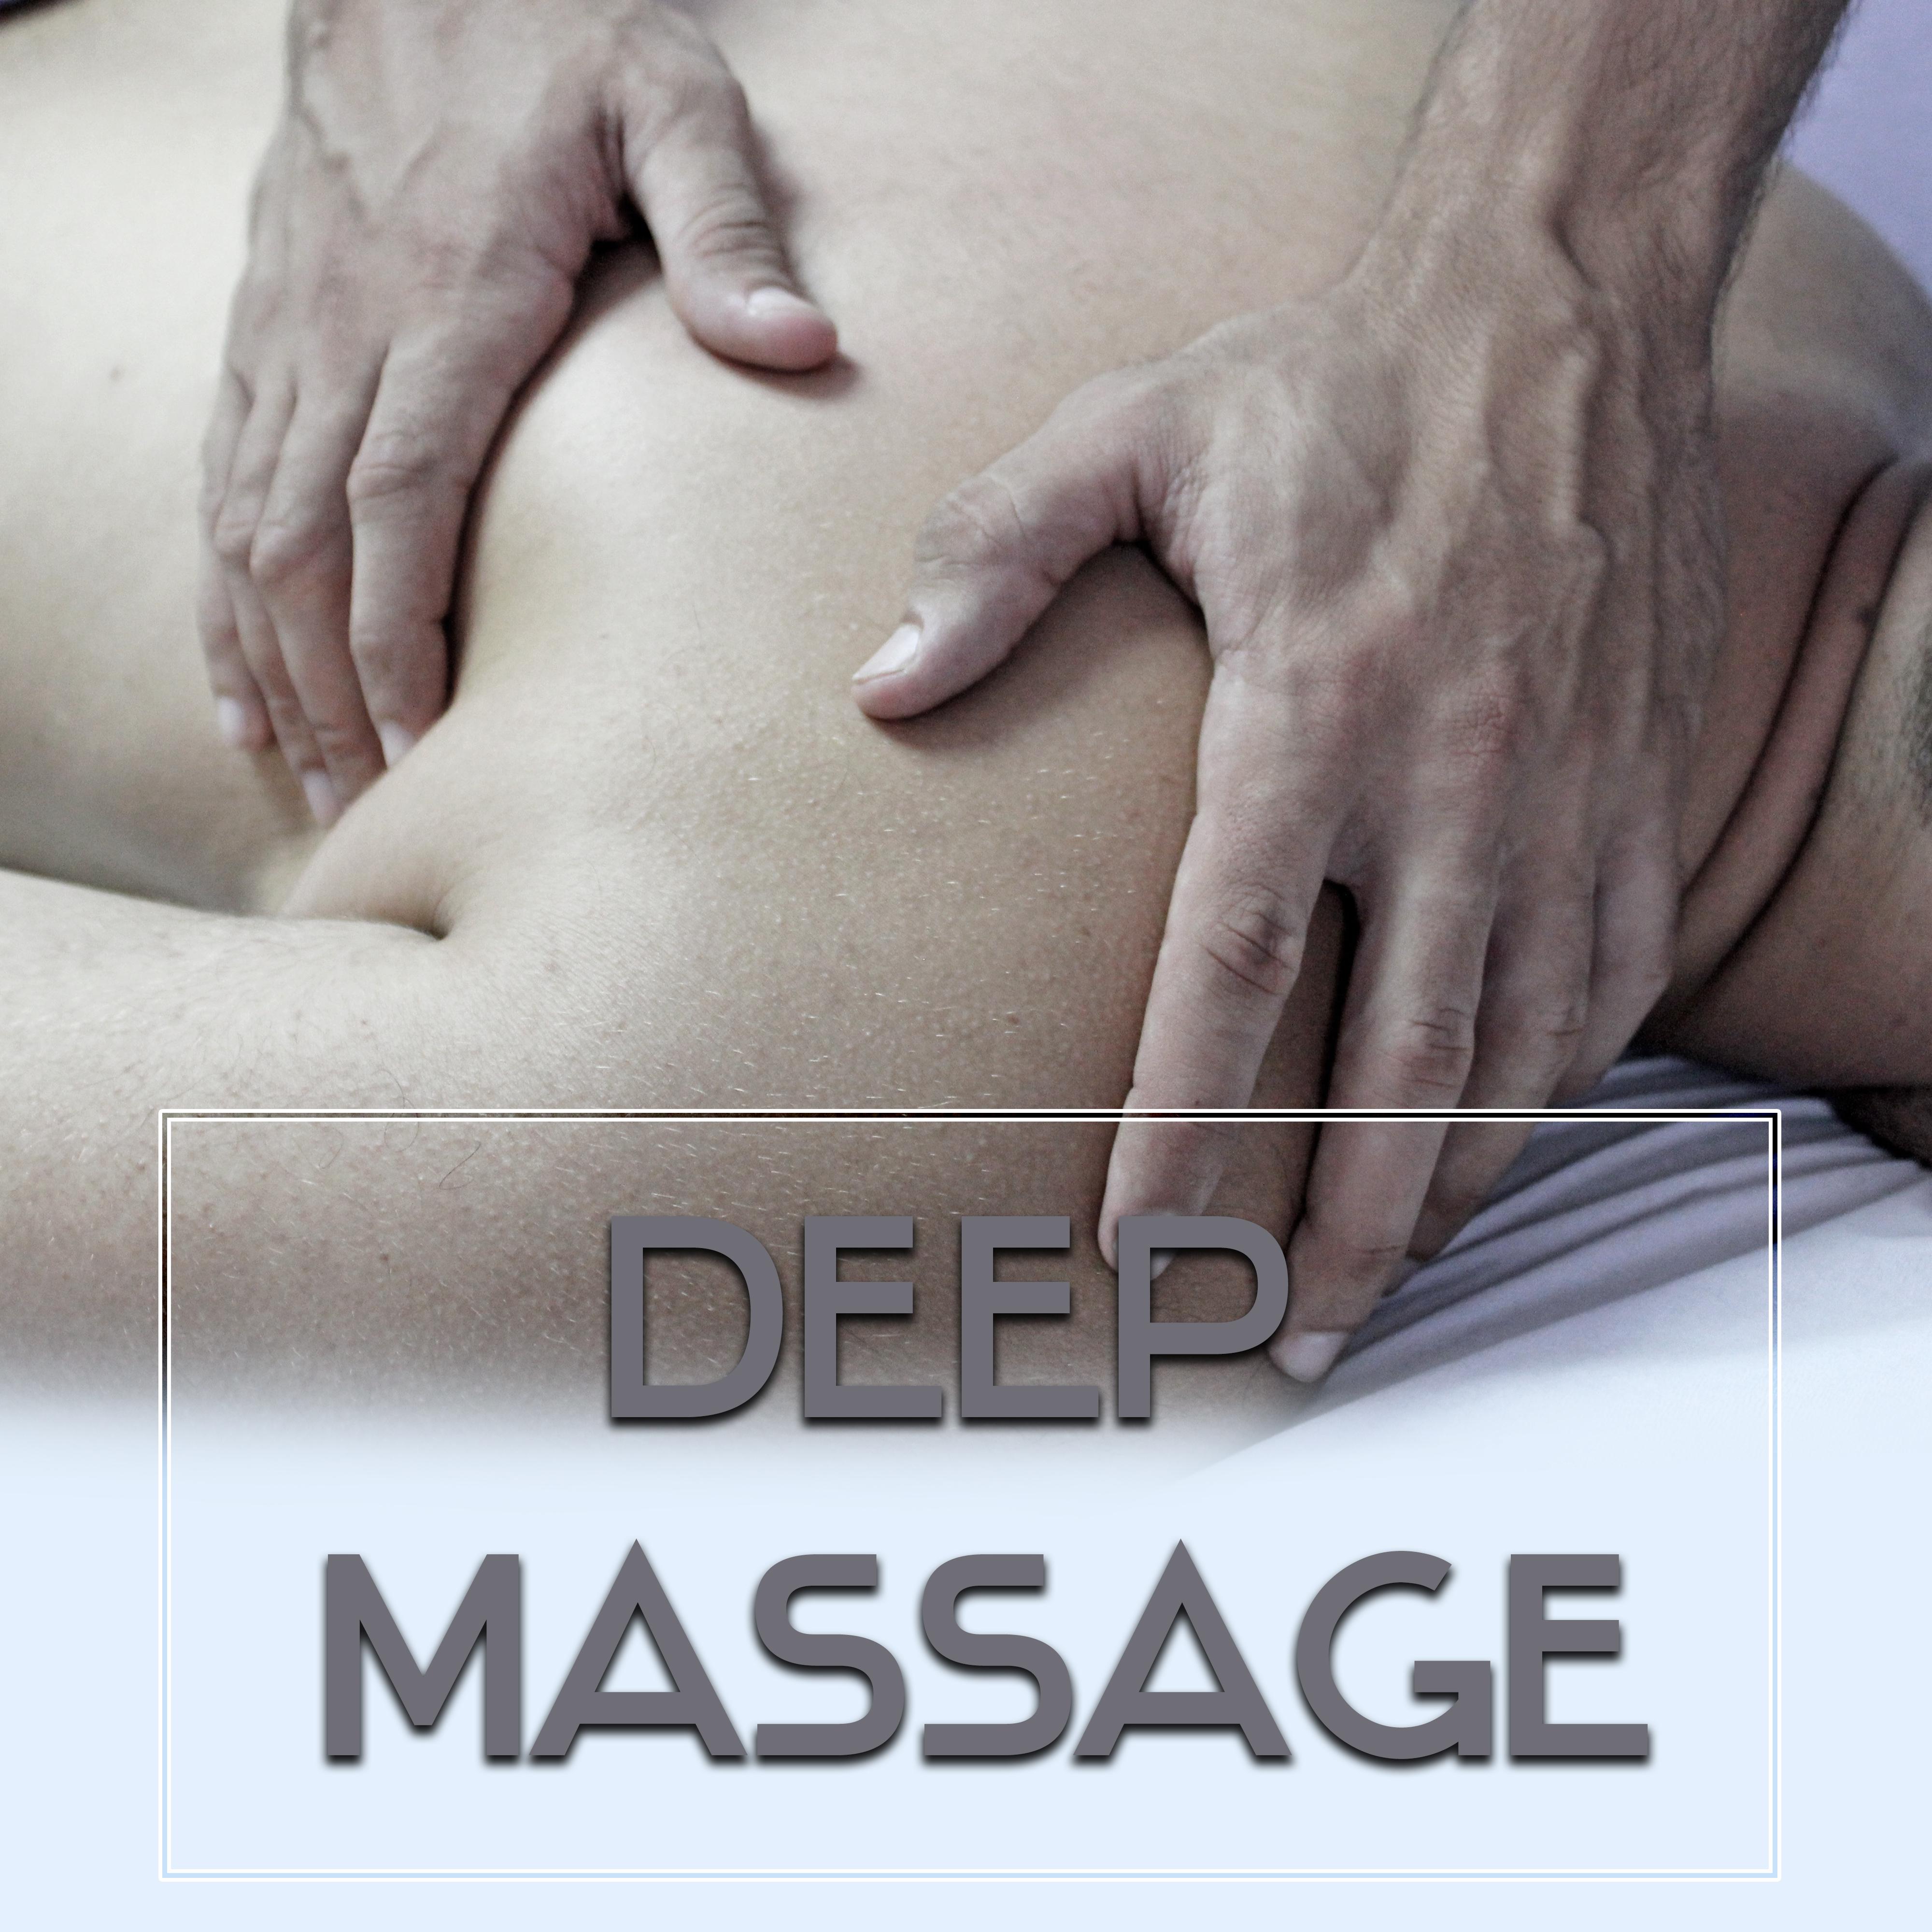 Deep Massage – Relaxation Music for Spa, Wellness, Deep Sleep, Calmness & Harmony, Asian Zen Spa, Peaceful Mind, Nature Sounds